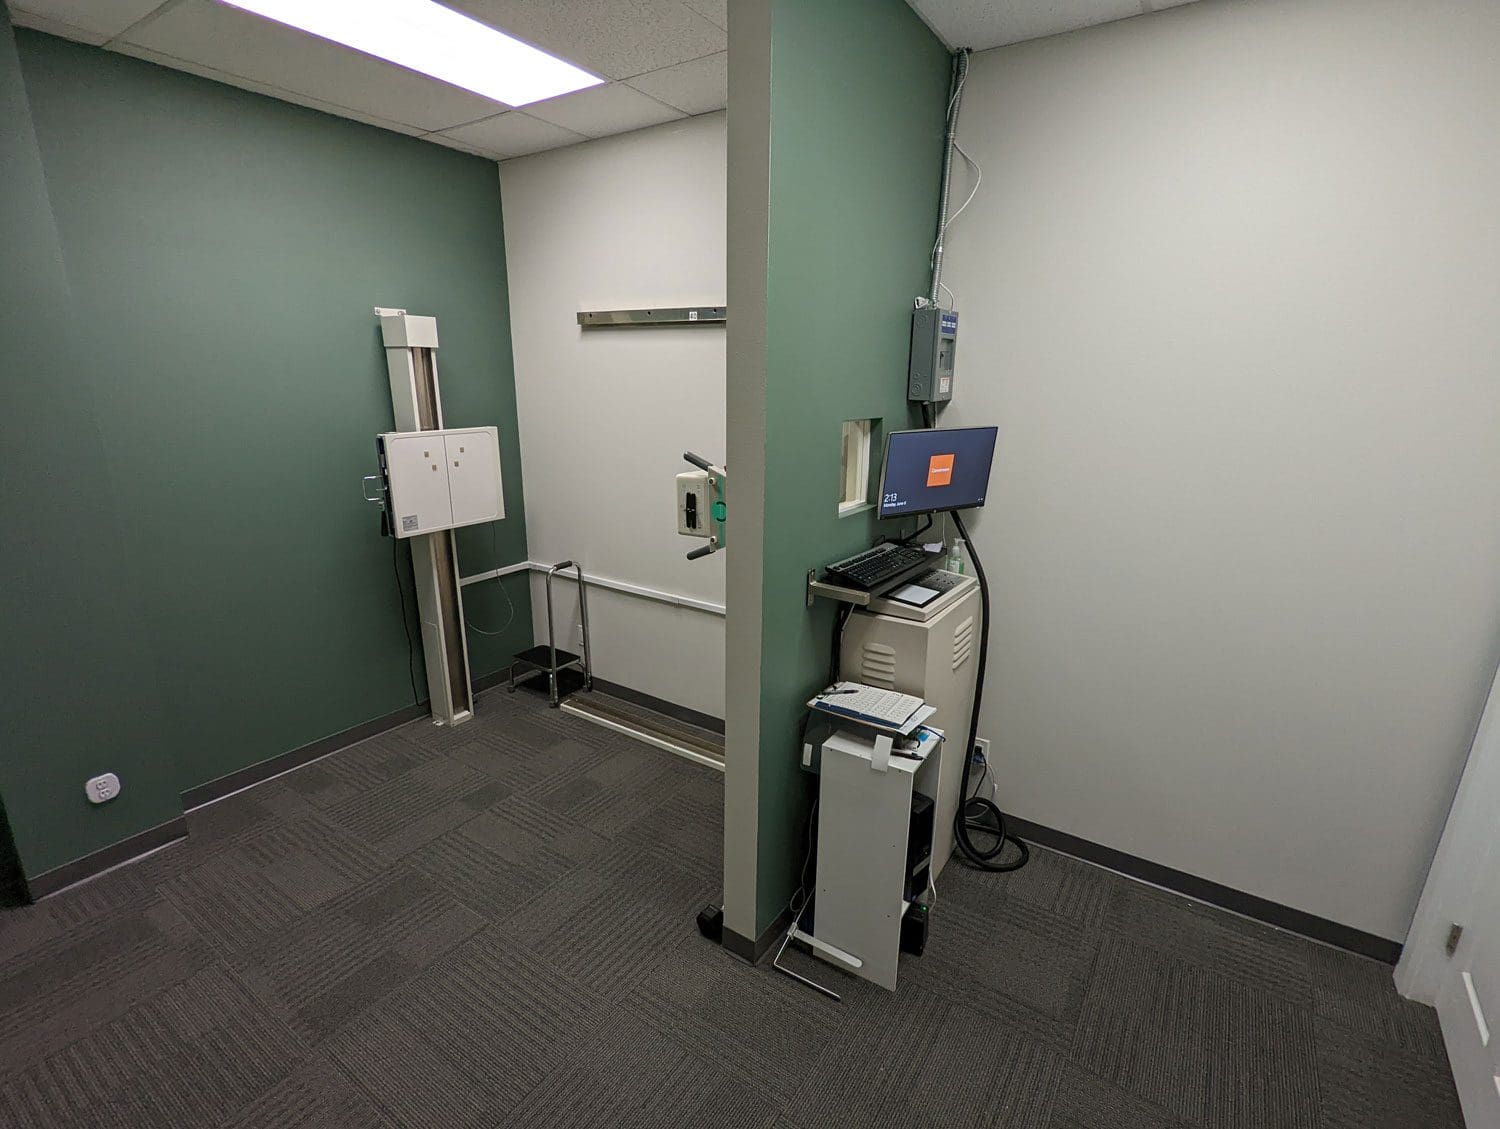 Woodburn Chiropractor X-ray room with a digital X-ray machine.